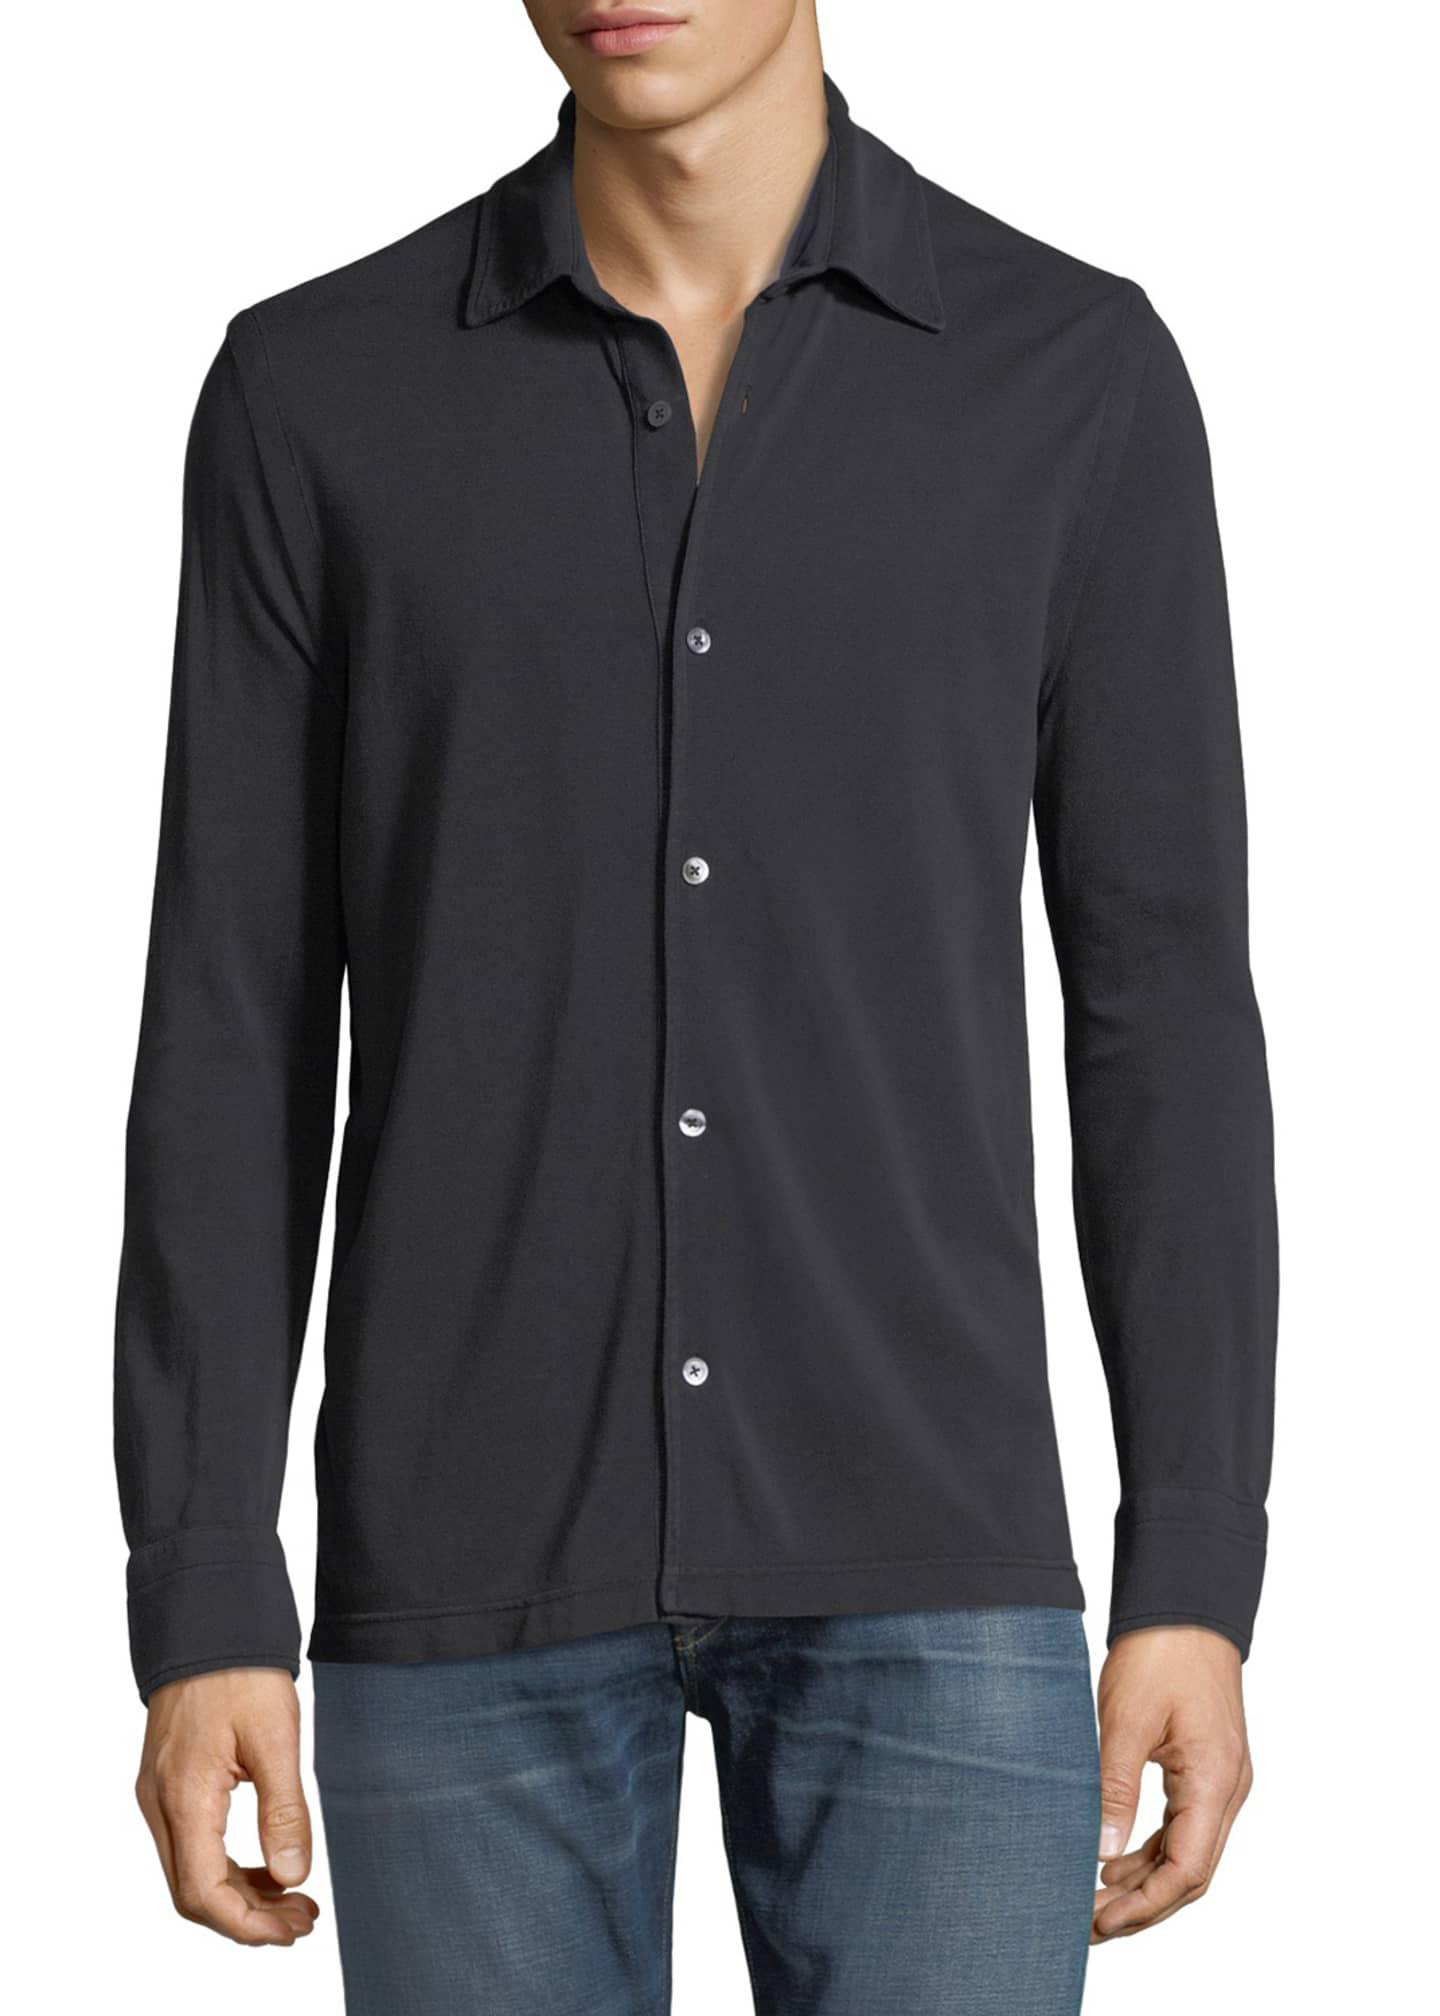 Tom Ford Silk Piqué-knit Sport Shirt in Black for Men - Lyst